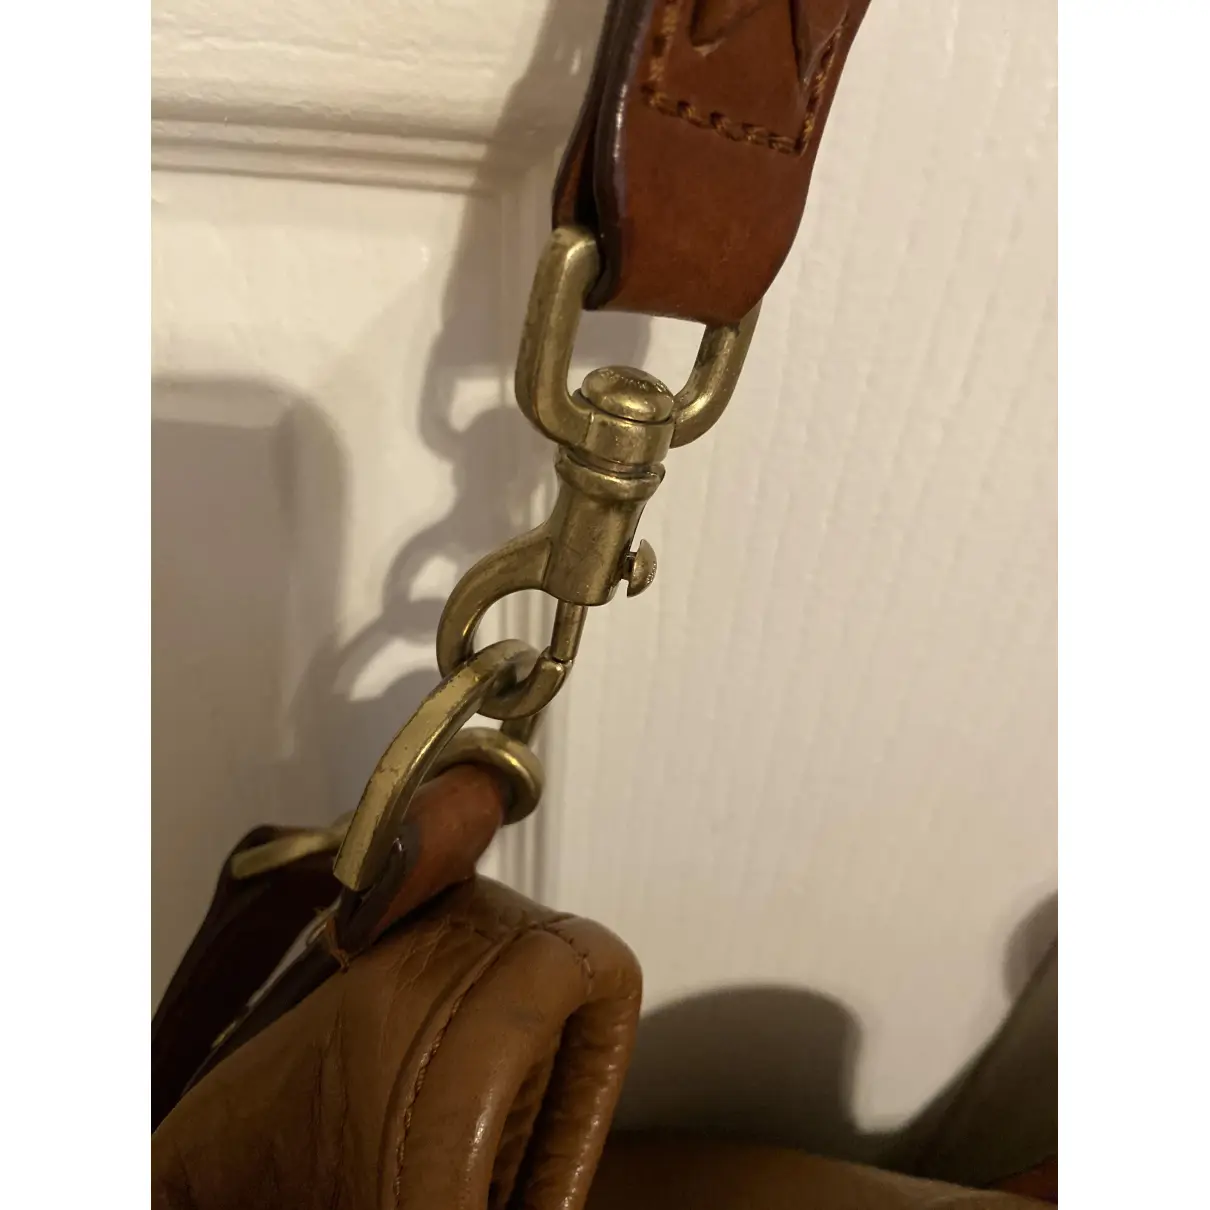 Effie leather handbag Mulberry